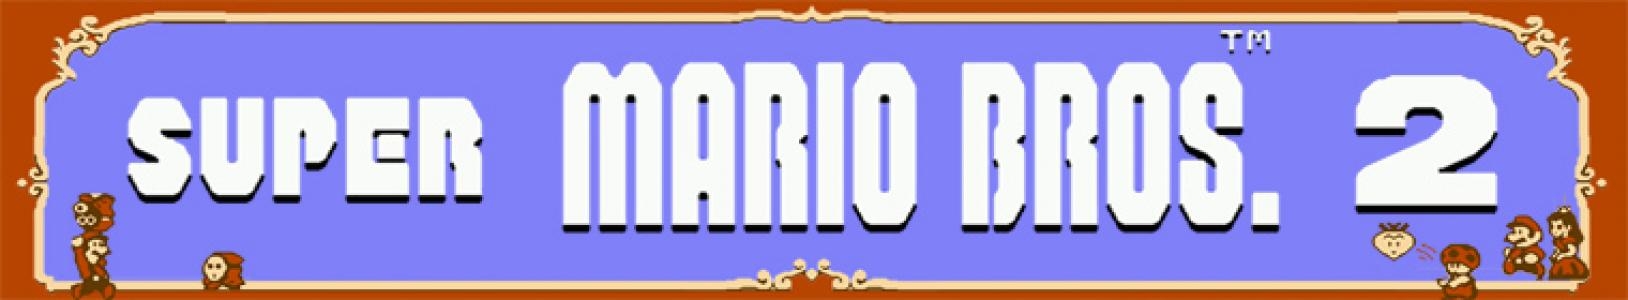 Super Mario Bros. 2 banner